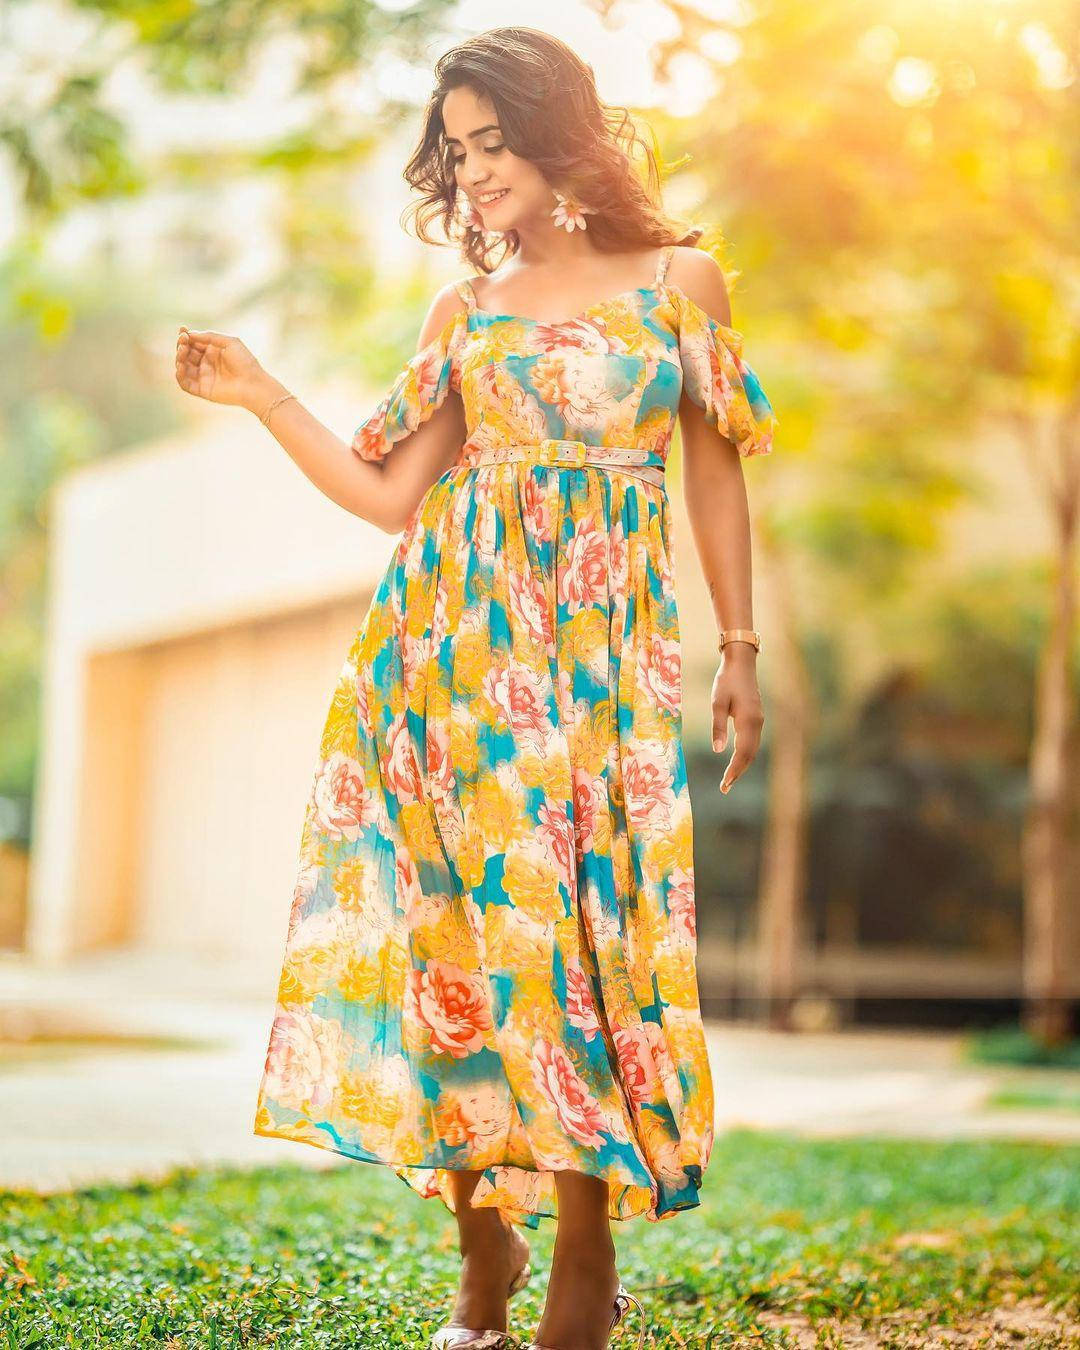 Nisha Guragain Captivating In Yellow Floral Dress Background